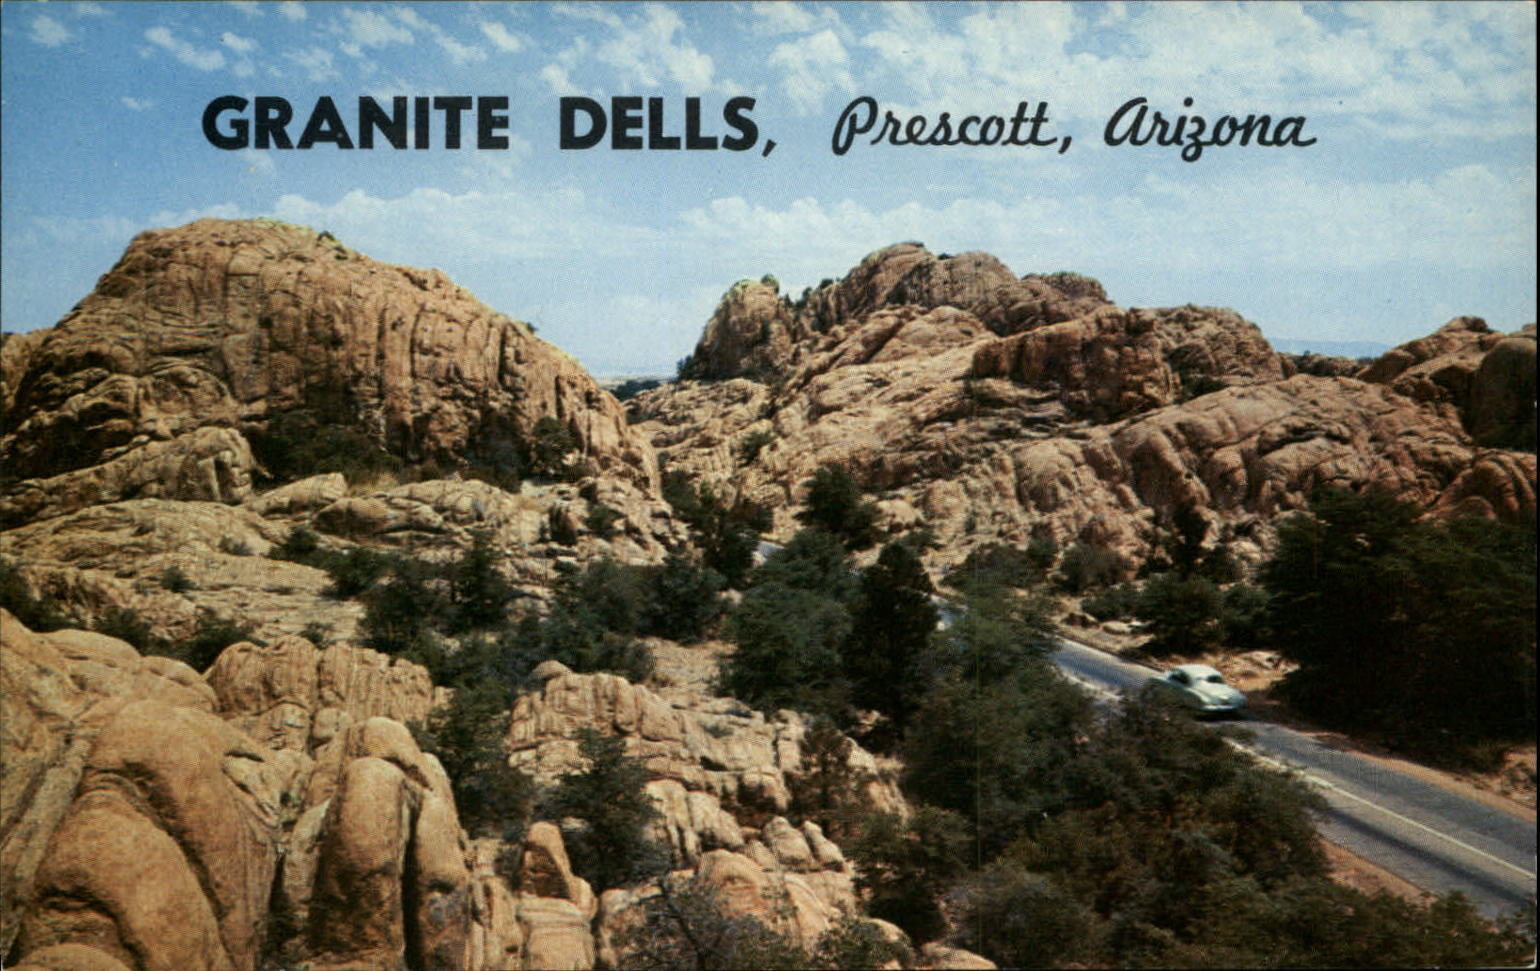 Prescott Arizona Granite Dells US Route 89 1950s car aerial vintage postcard